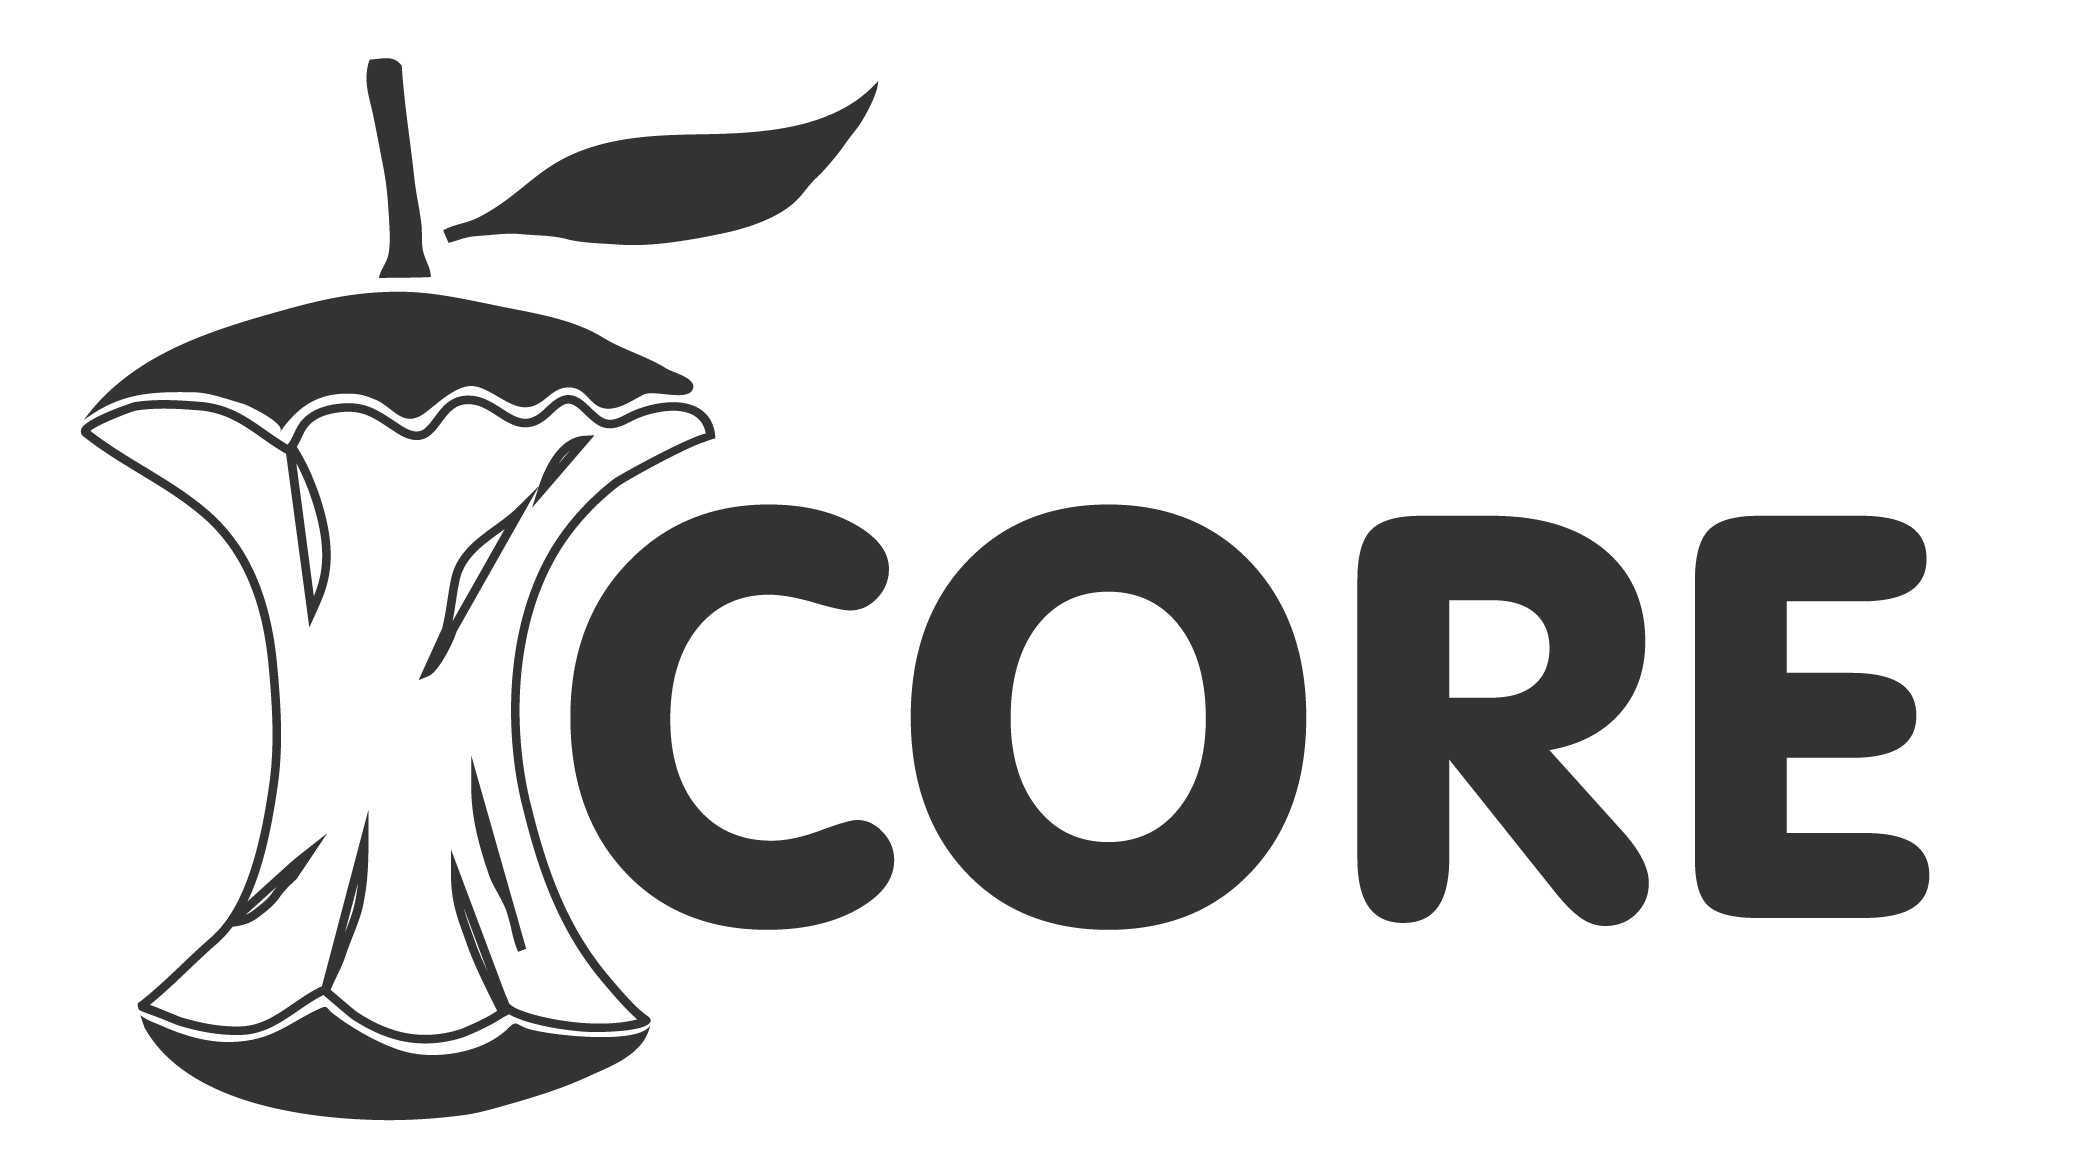 CORE's logo